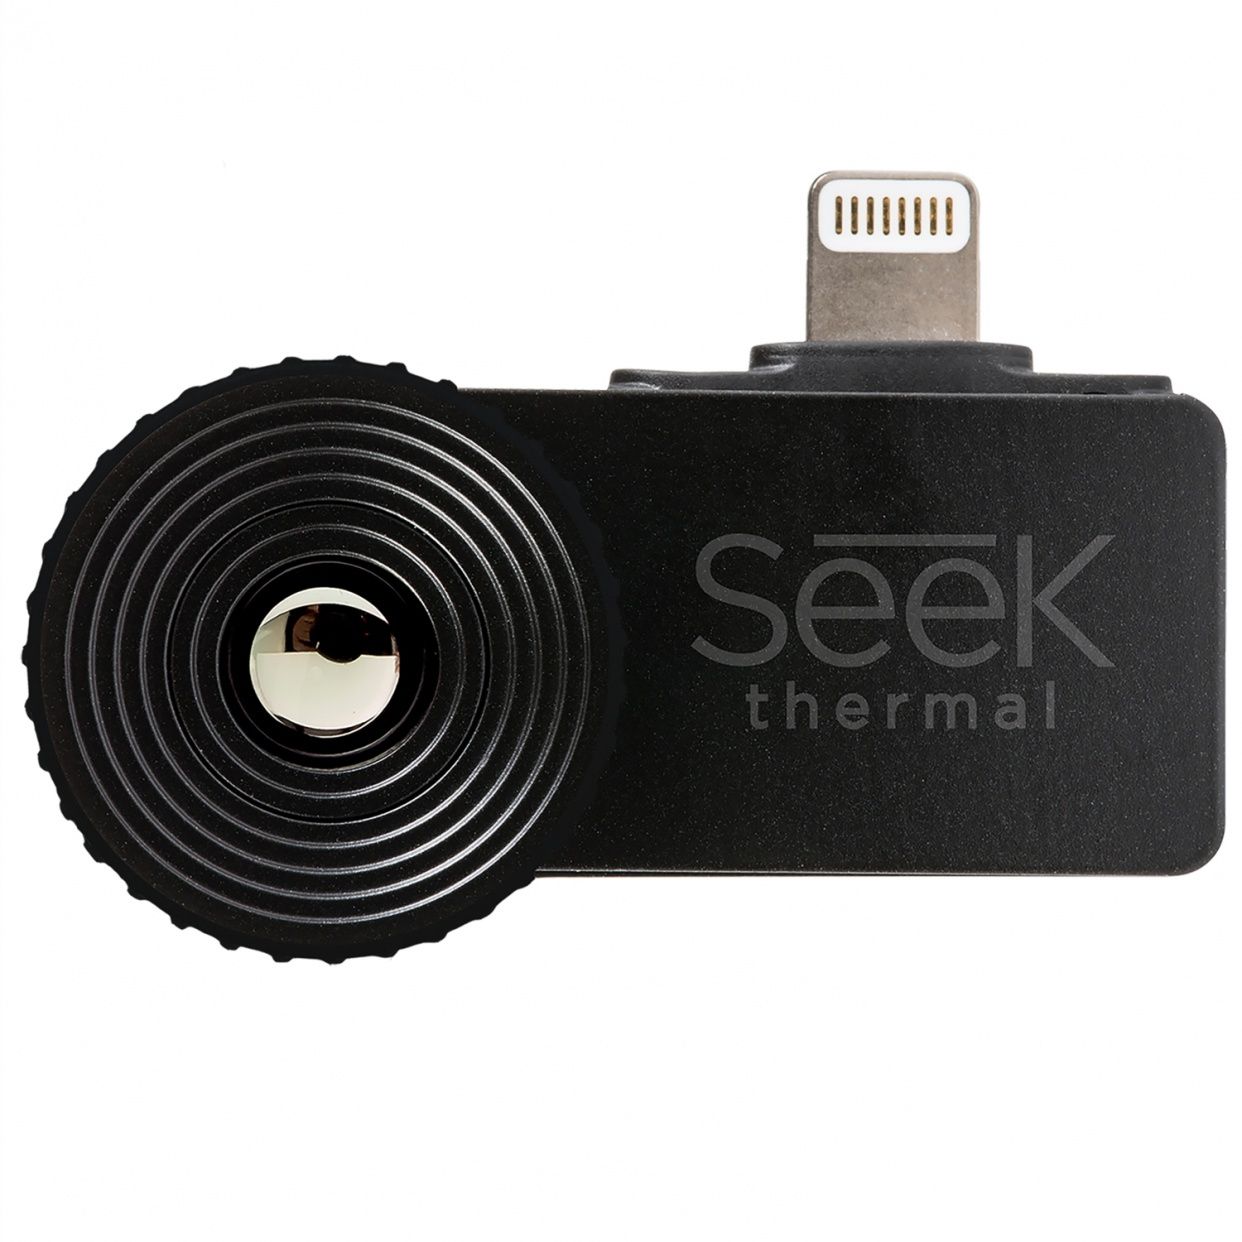 Seek Thermal LT-AAA thermal imaging camera Black 206 x 156 pixels_1